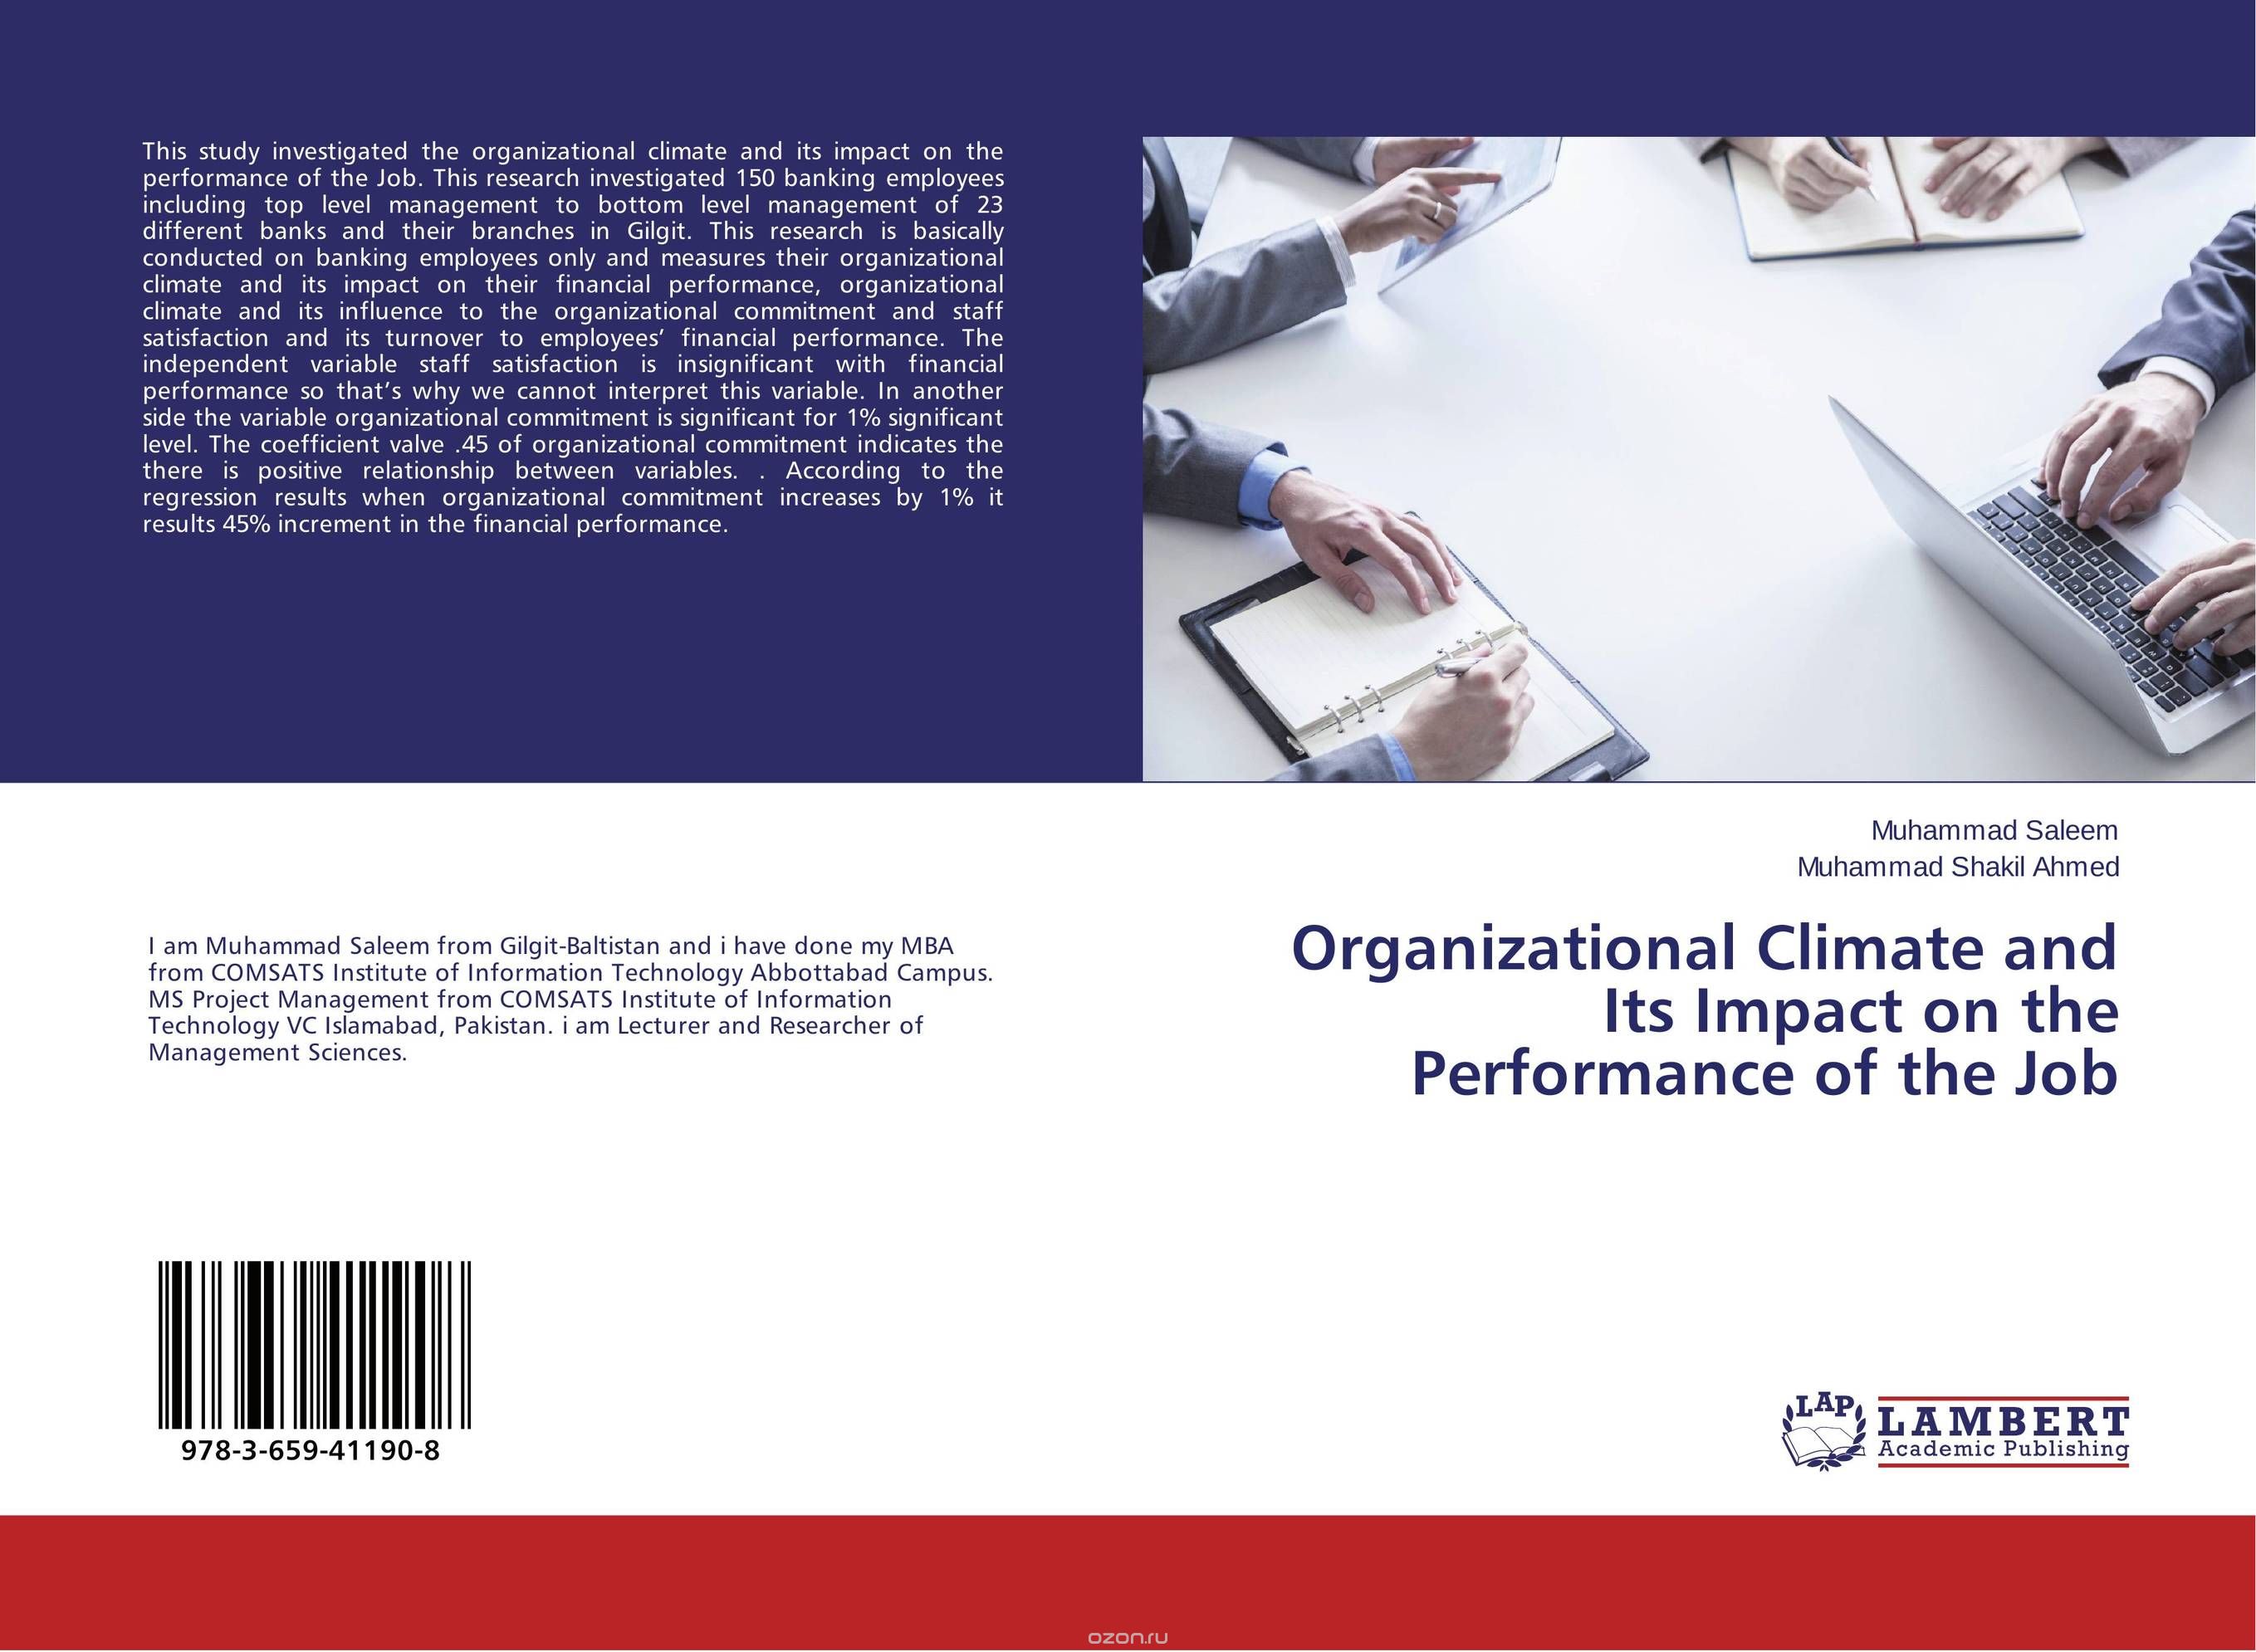 Скачать книгу "Organizational Climate and Its Impact on the Performance of the Job"